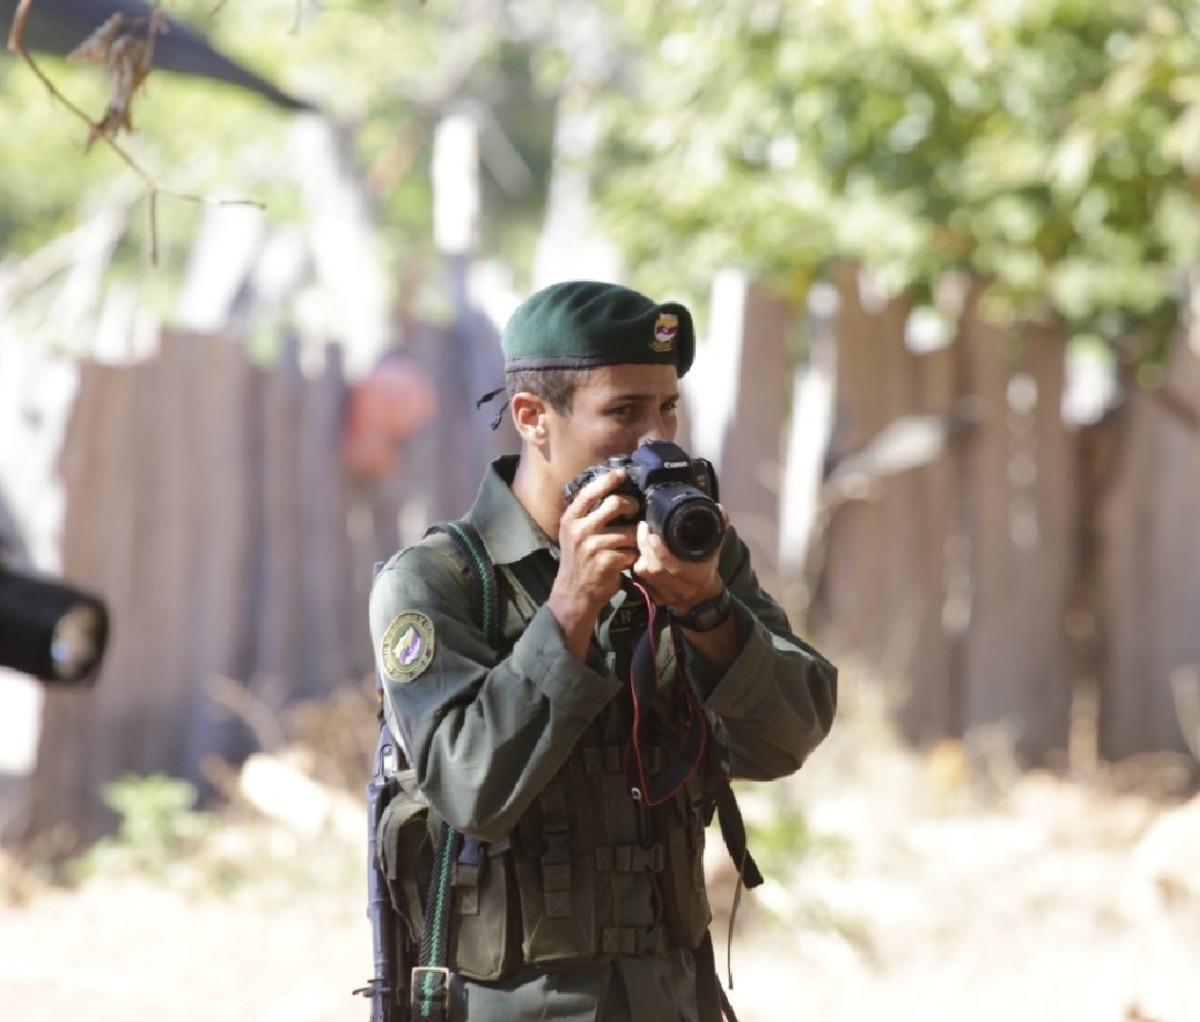 Guerilla-turned-bird guide Marcos De La Oz, holding a camera in army fatigues.